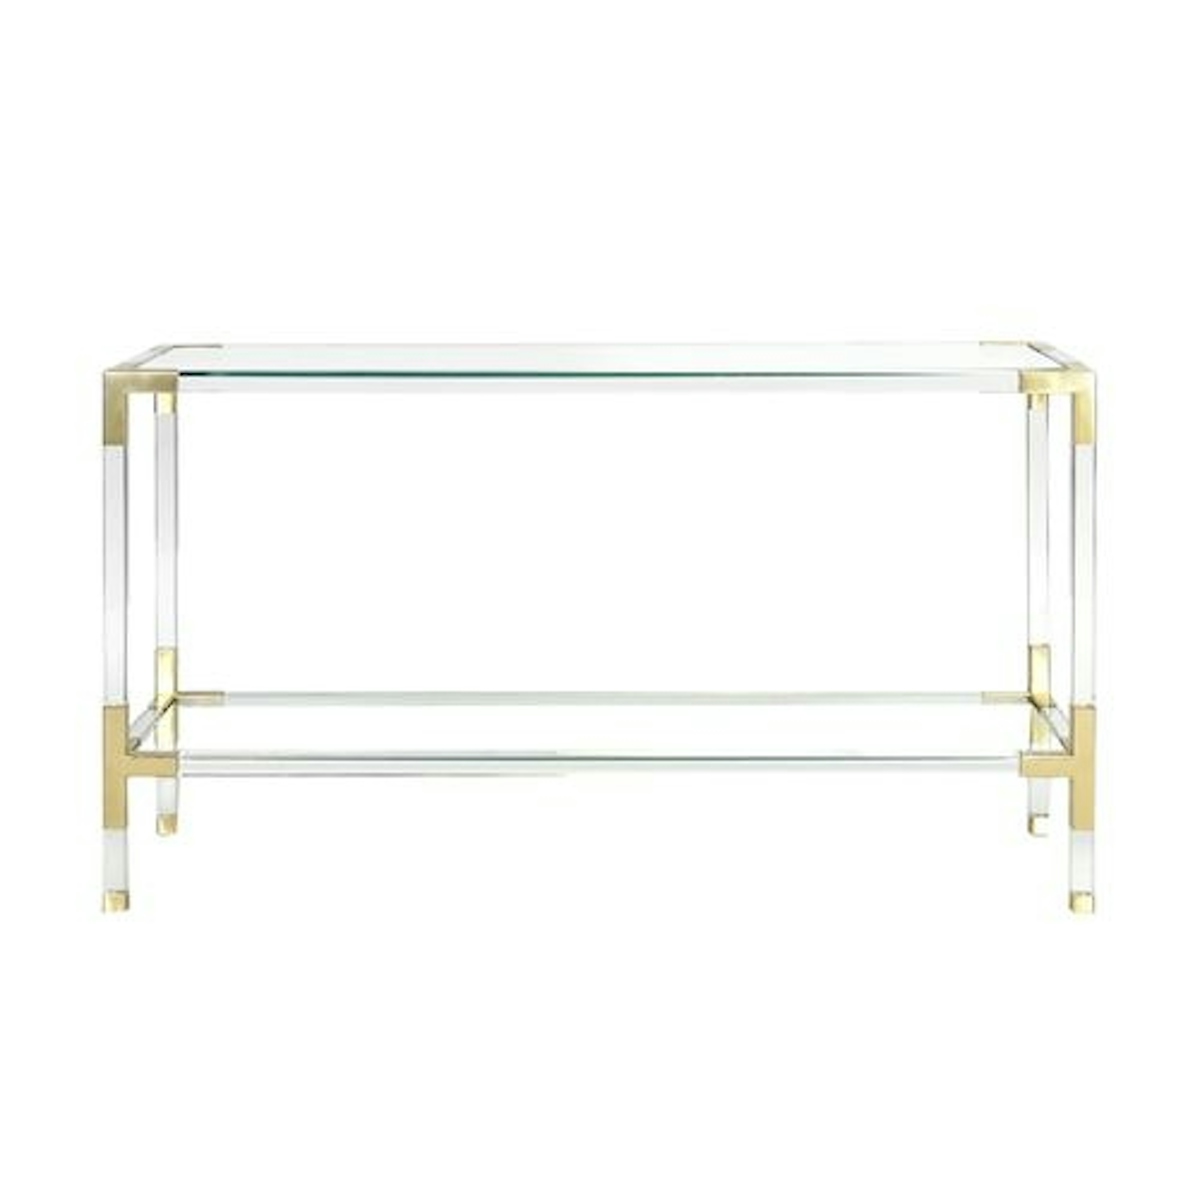 Brass table | Shop console tables online at LuxDeco.com